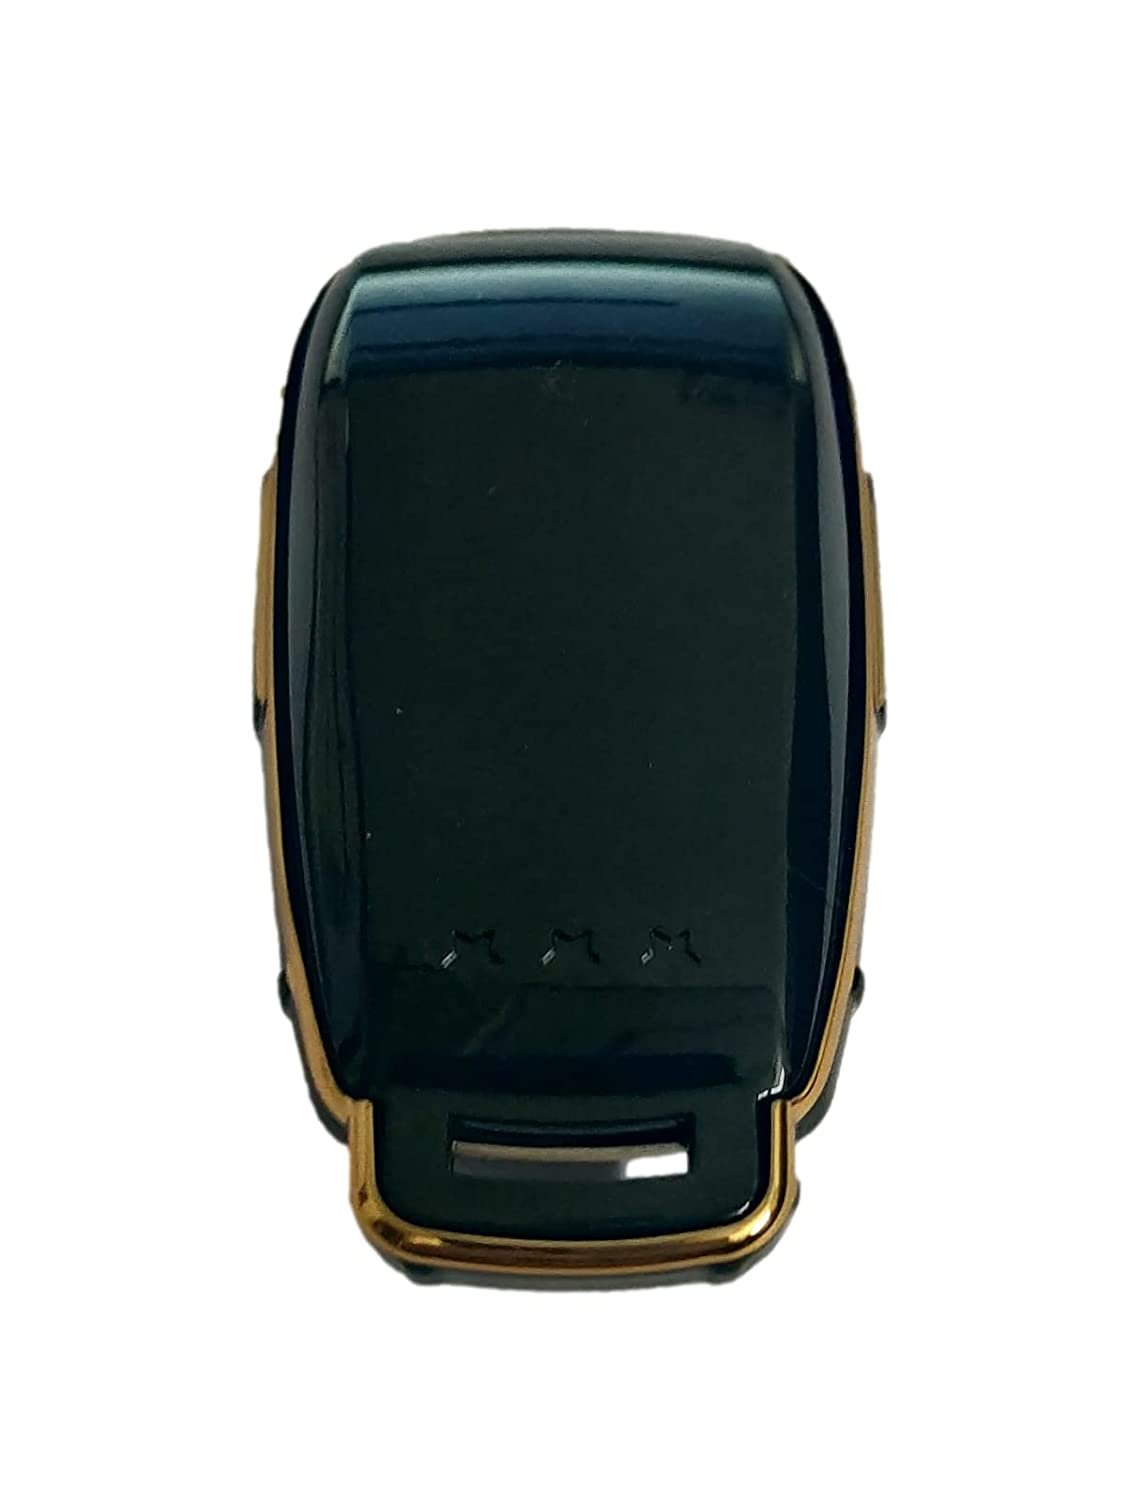 TPU Carbon Fiber Style Car Key Cover Compatible for Benz E Series Smart Key (Gold Black) Image 